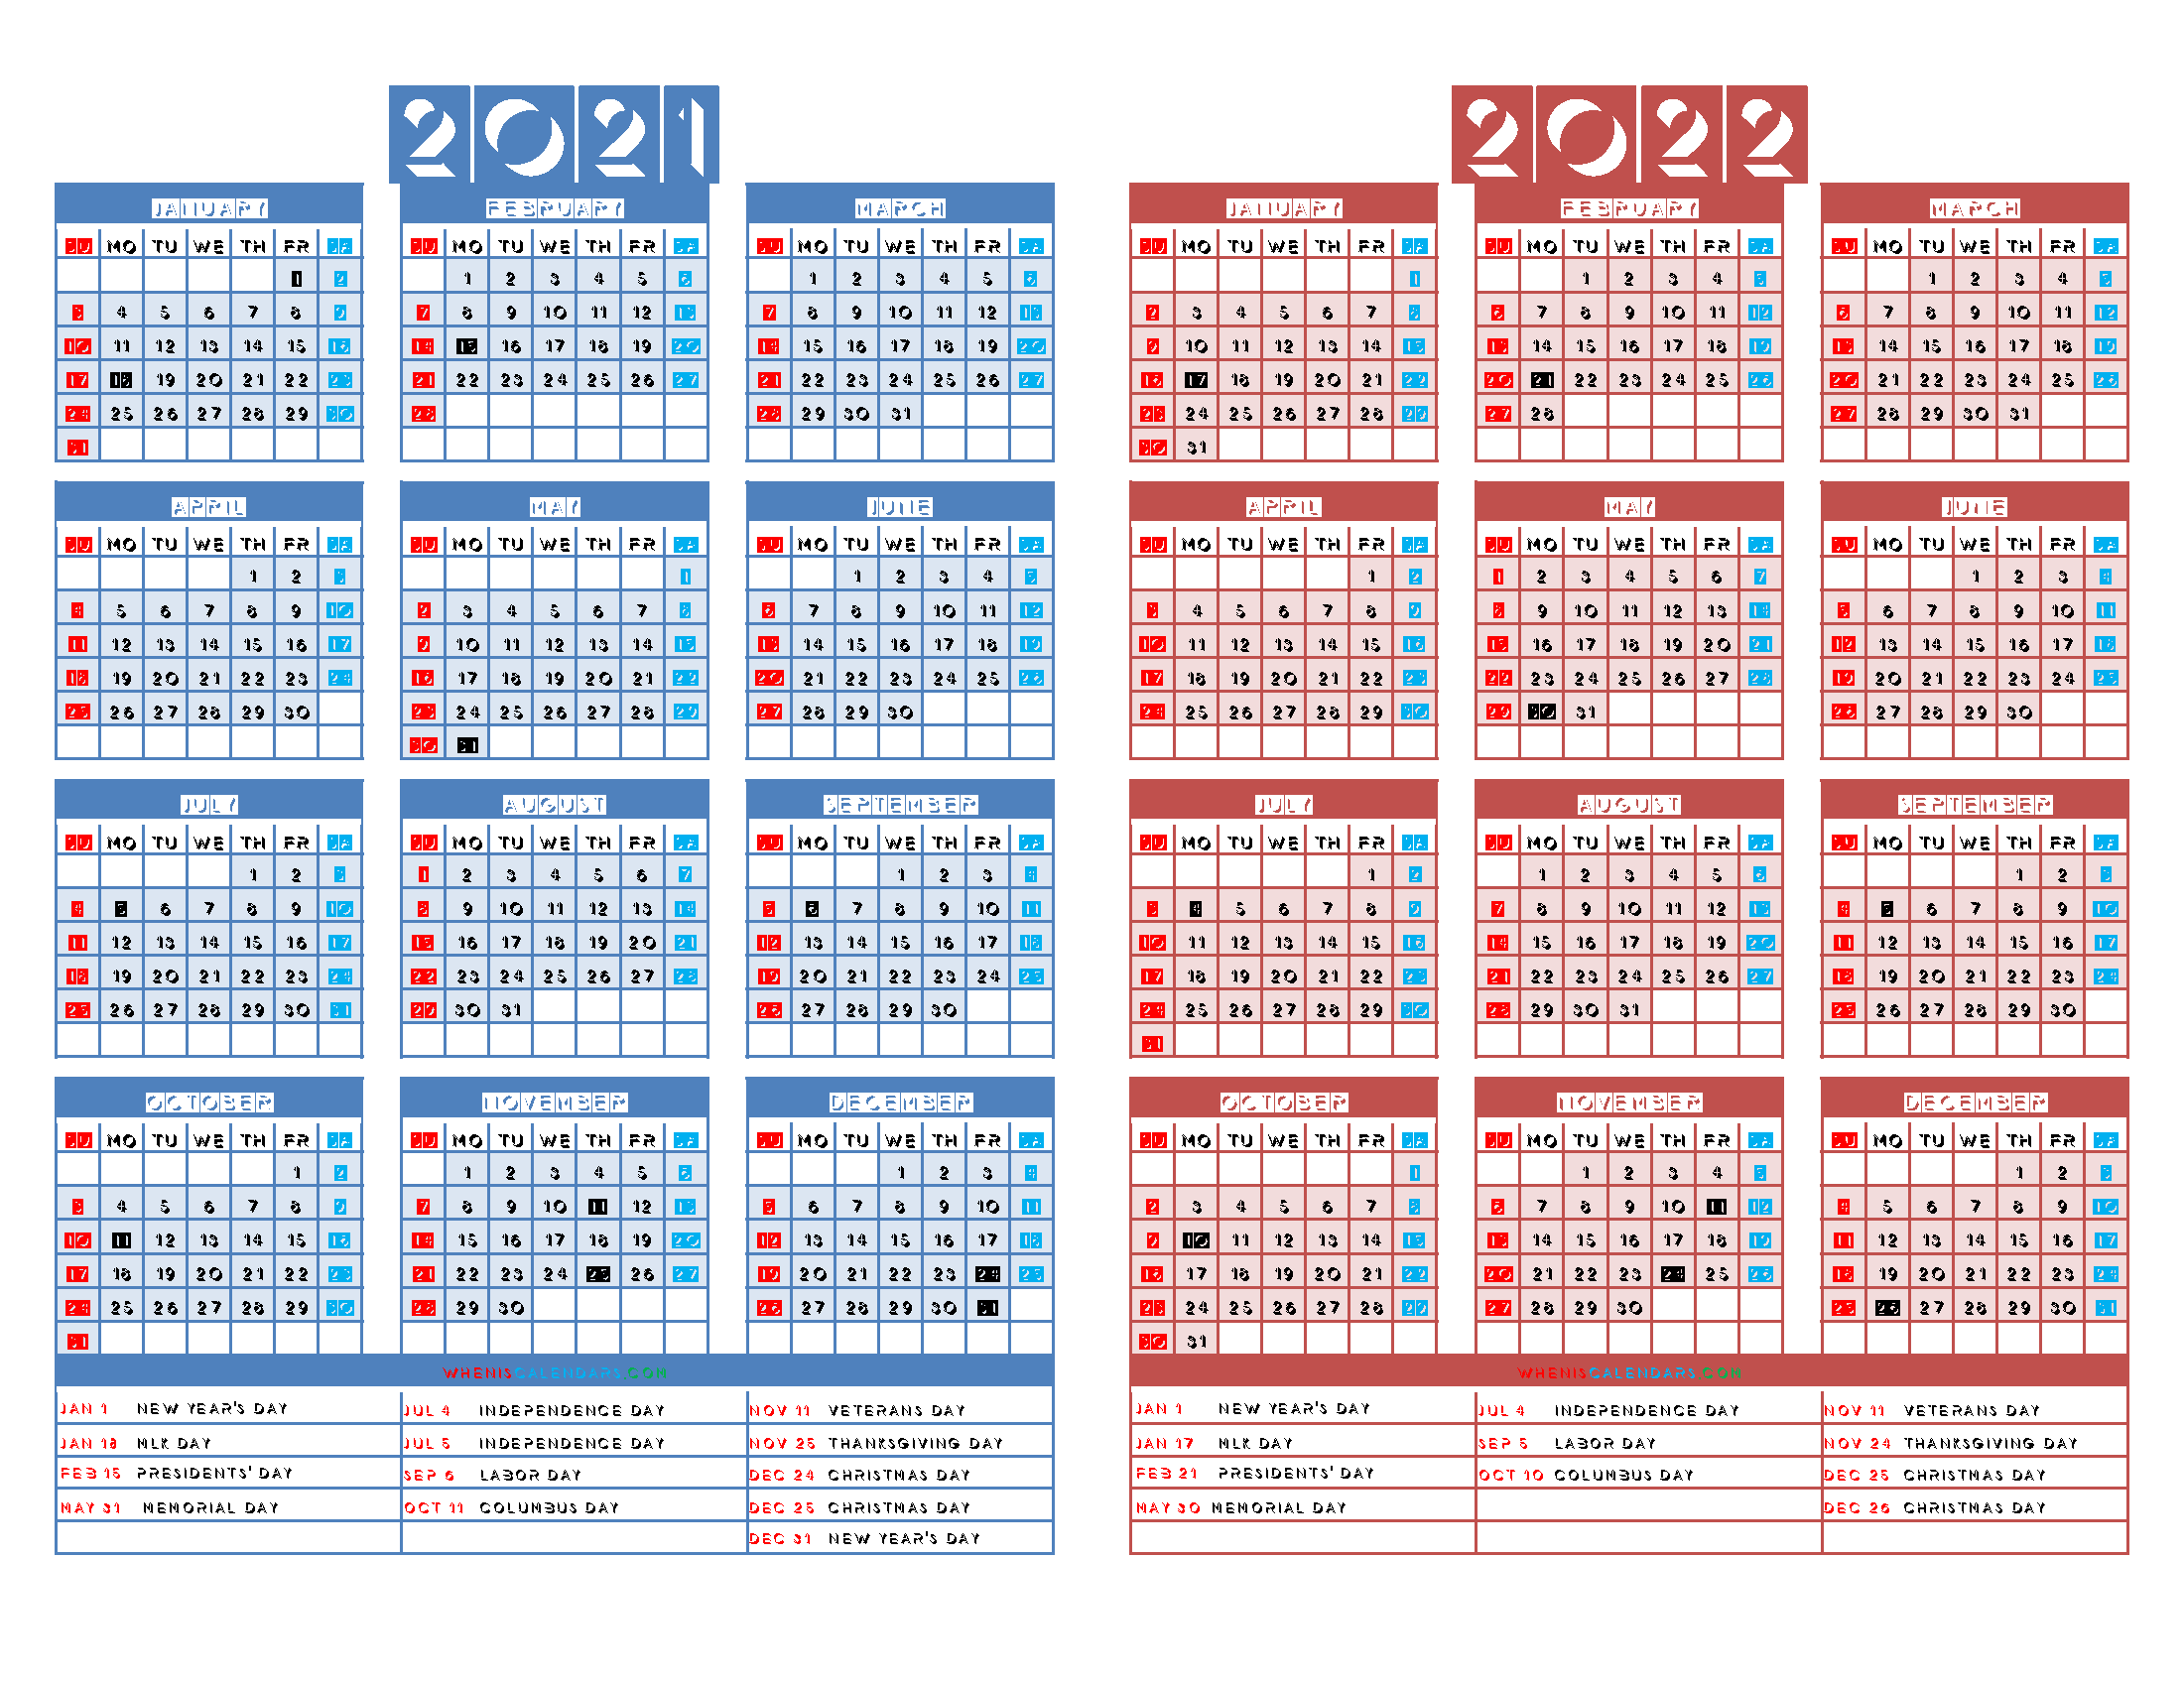 2021 and 2022 Printable Calendar with Holidays